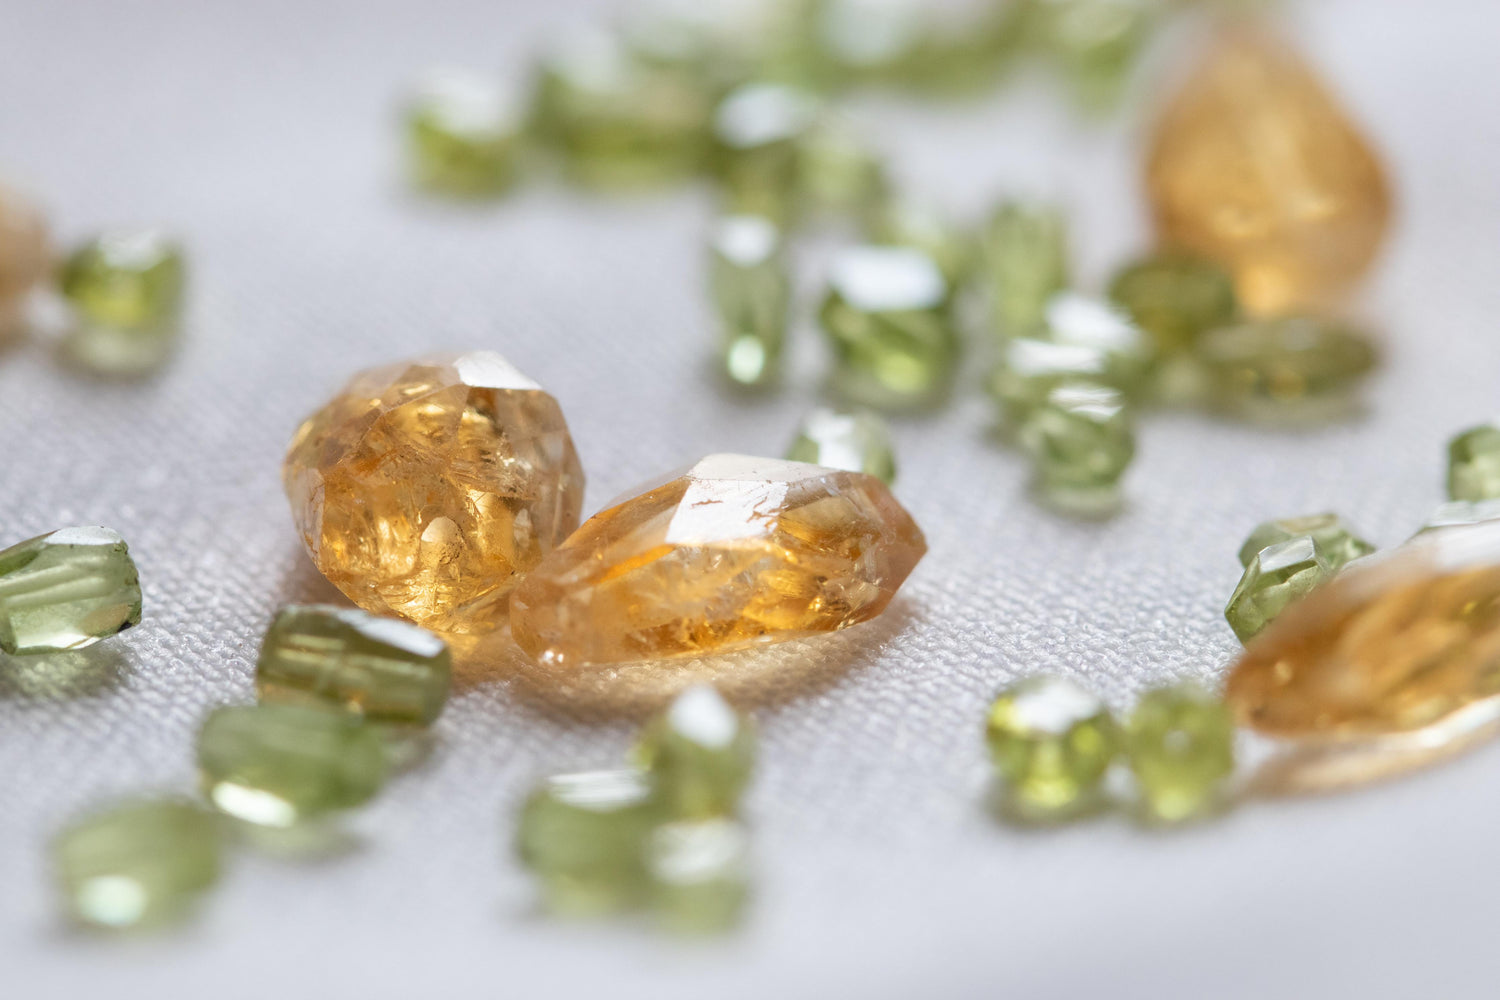 Yellow and green gemstones